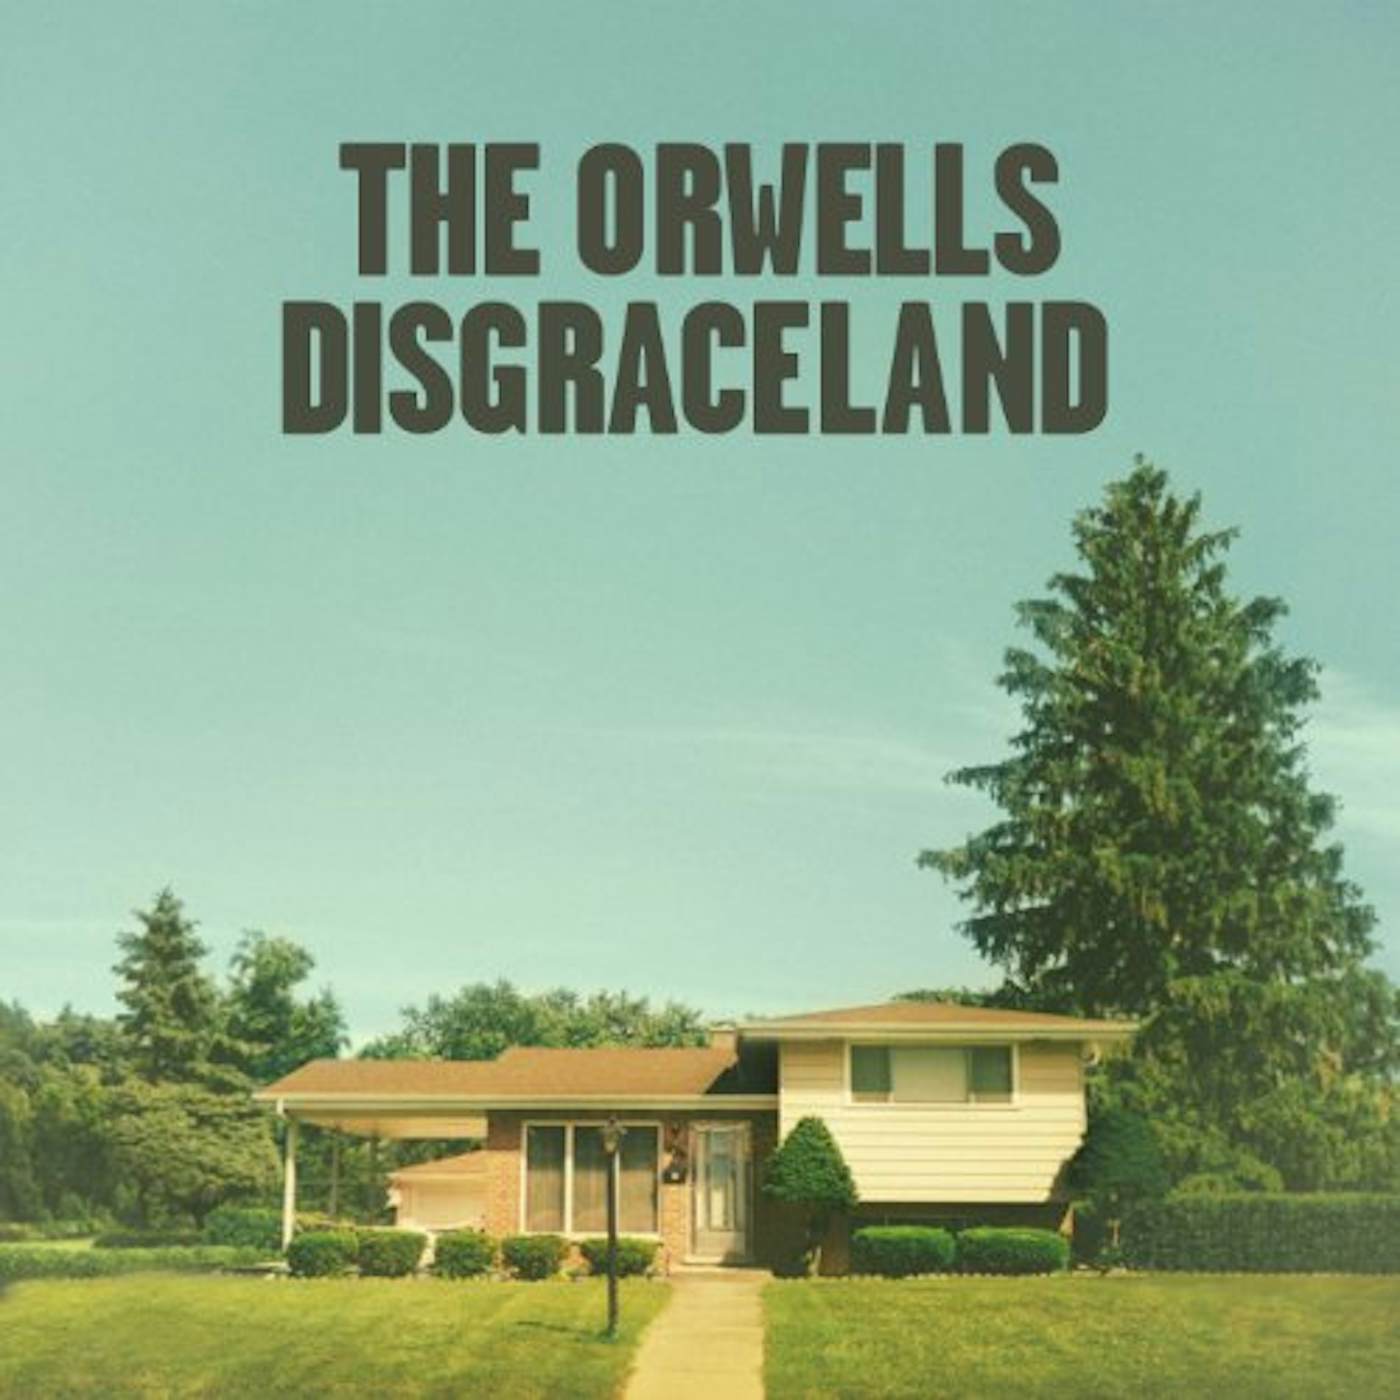 The Orwells DISGRACELAND CD